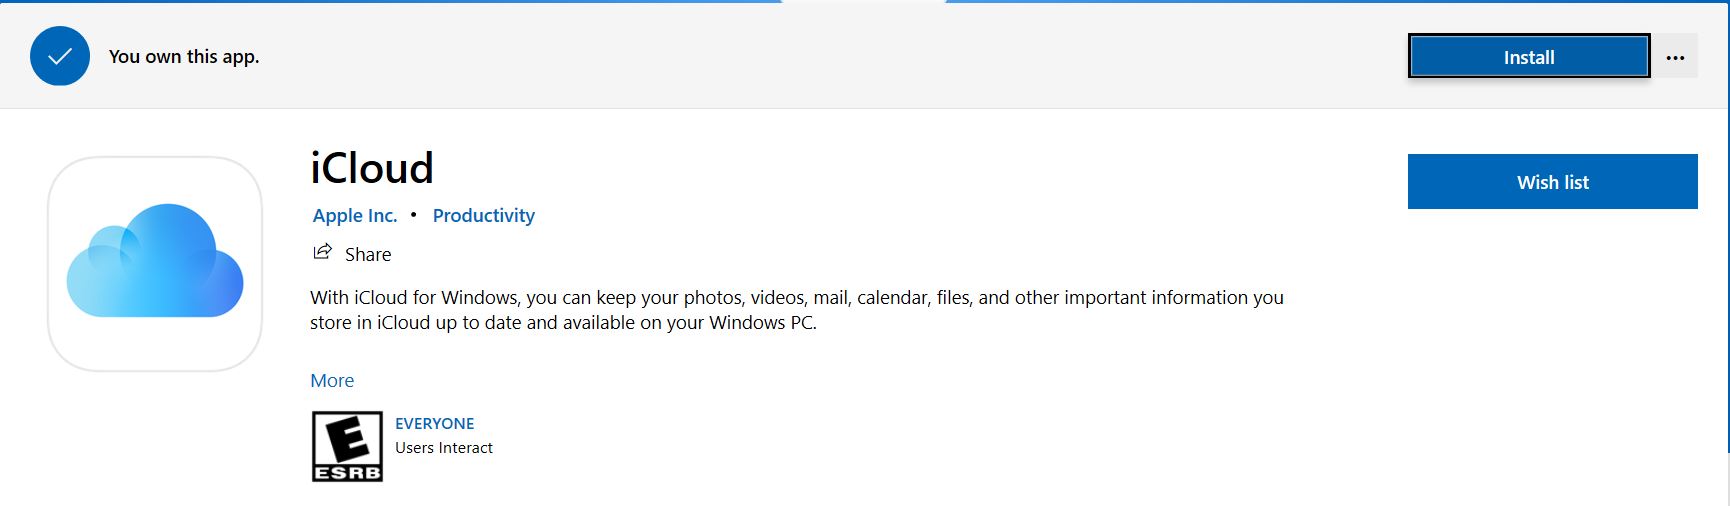 Cannot Uninstall iCloud From Windows 10 0x80073cfaj 0df4ba96-daca-430d-b010-4d071dfedea9?upload=true.jpg